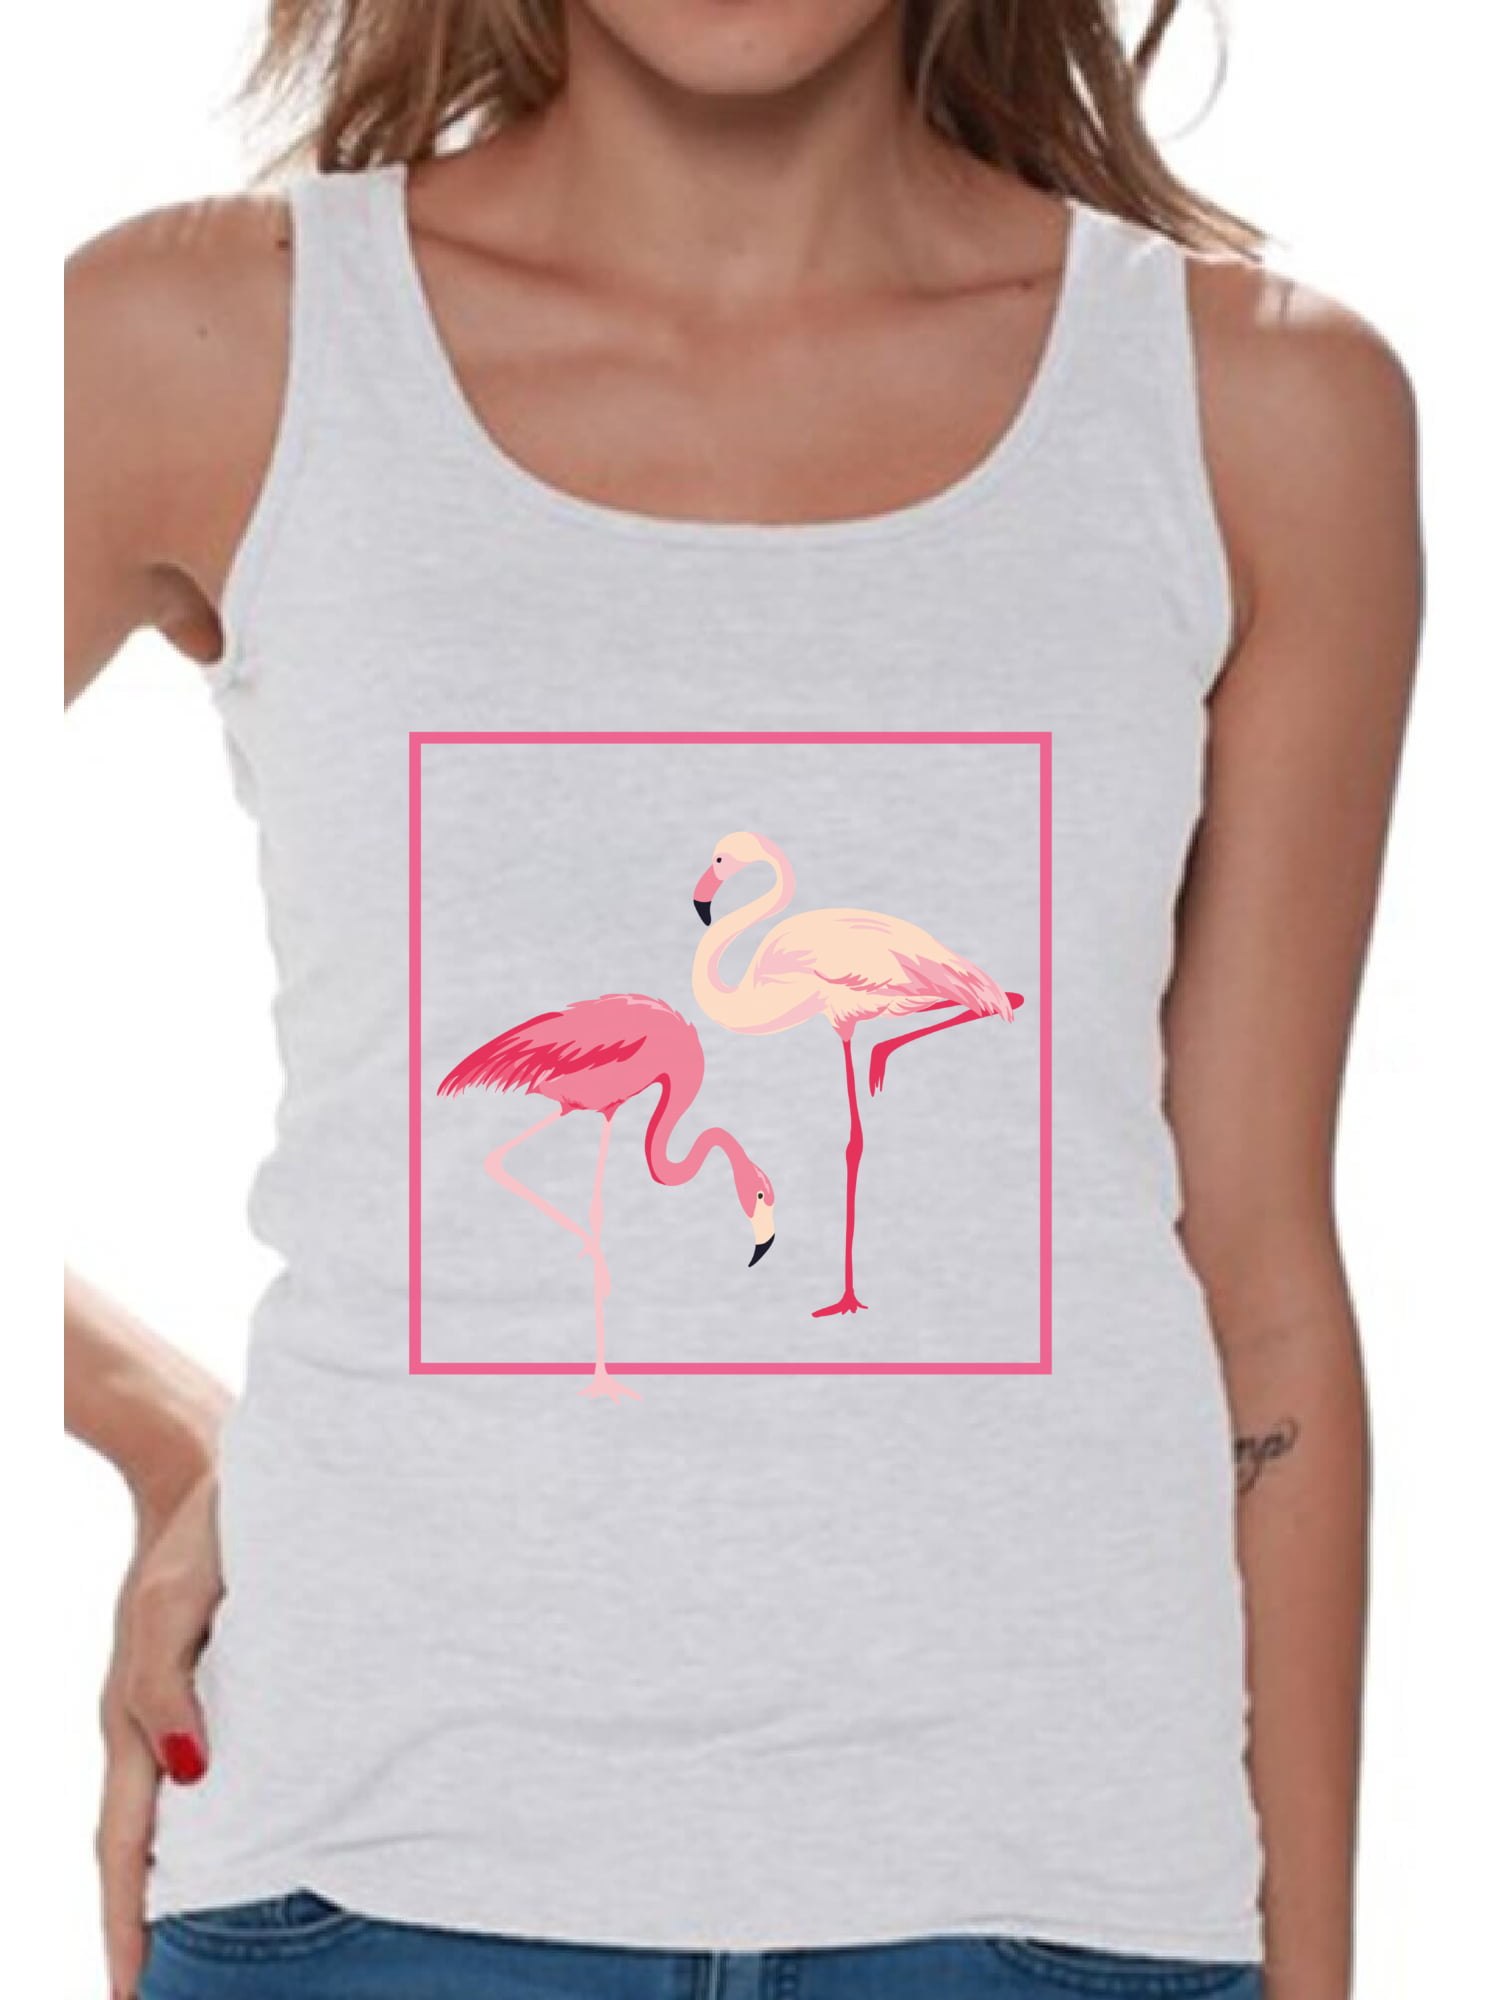 Awkward Styles - Awkward Styles Flamingo Love Tank Top for Women Pink ...